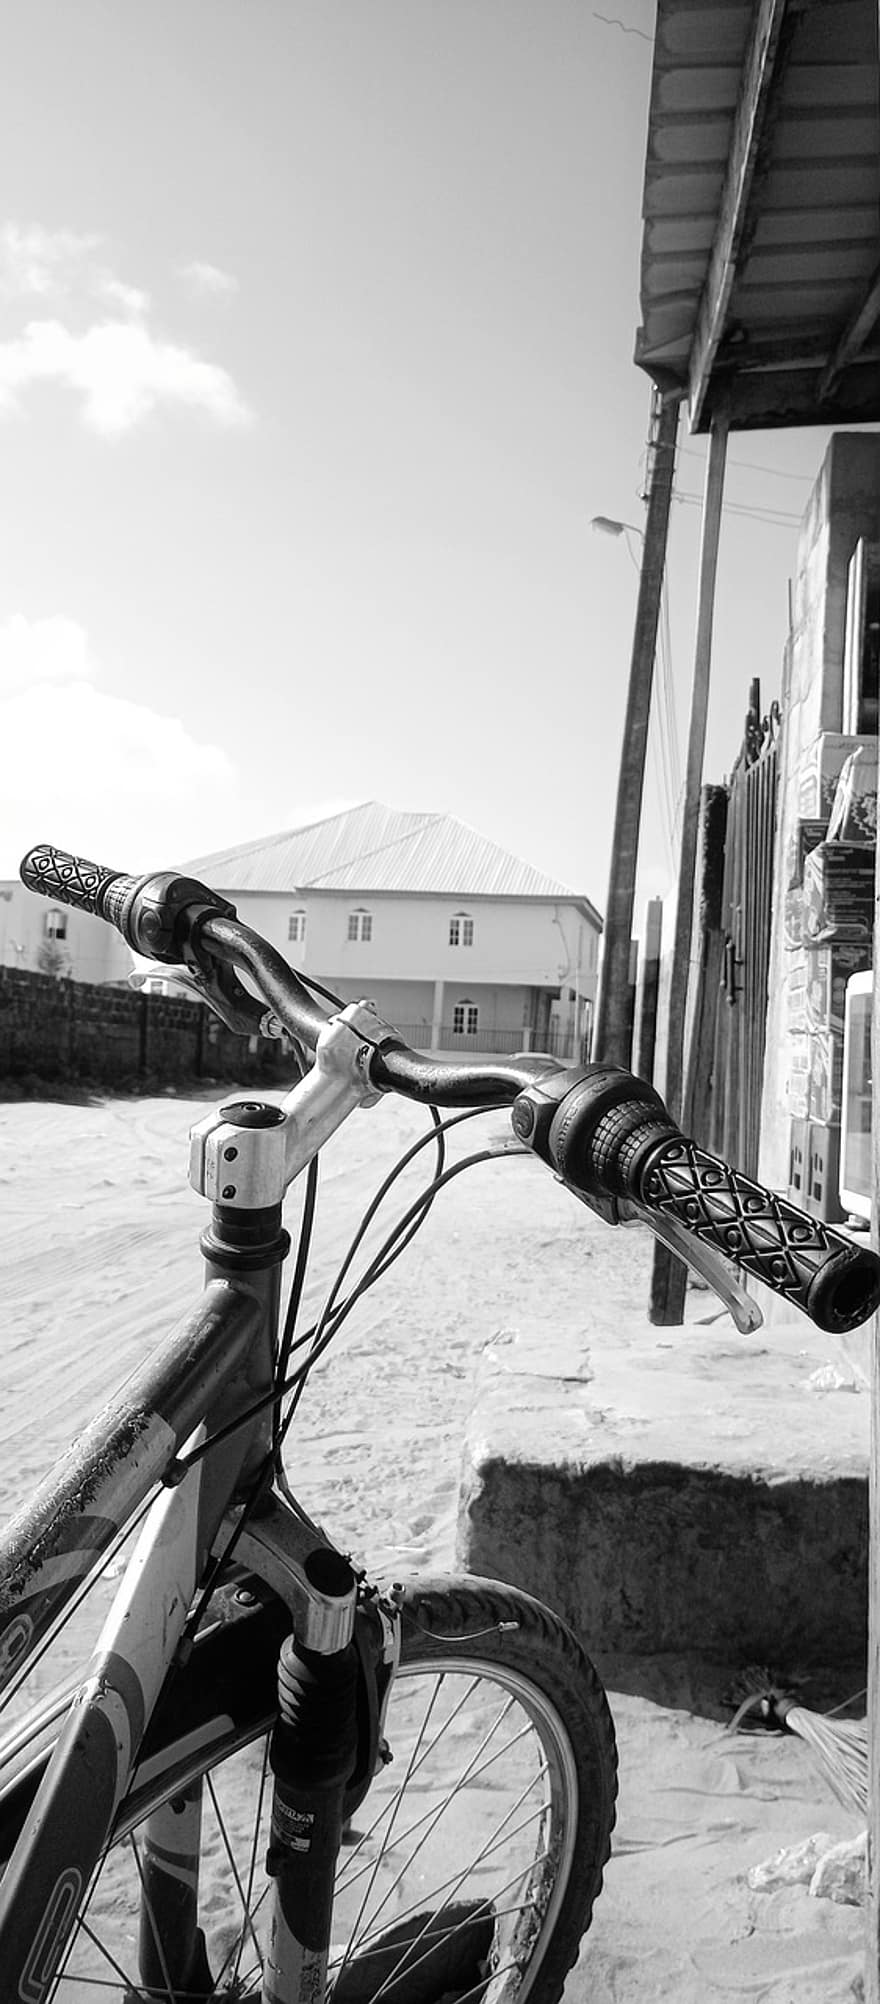 Bicycle, Street, Road, Black And White, Bike, Sand, Outdoors, Houses, Neighborhood, Lagos